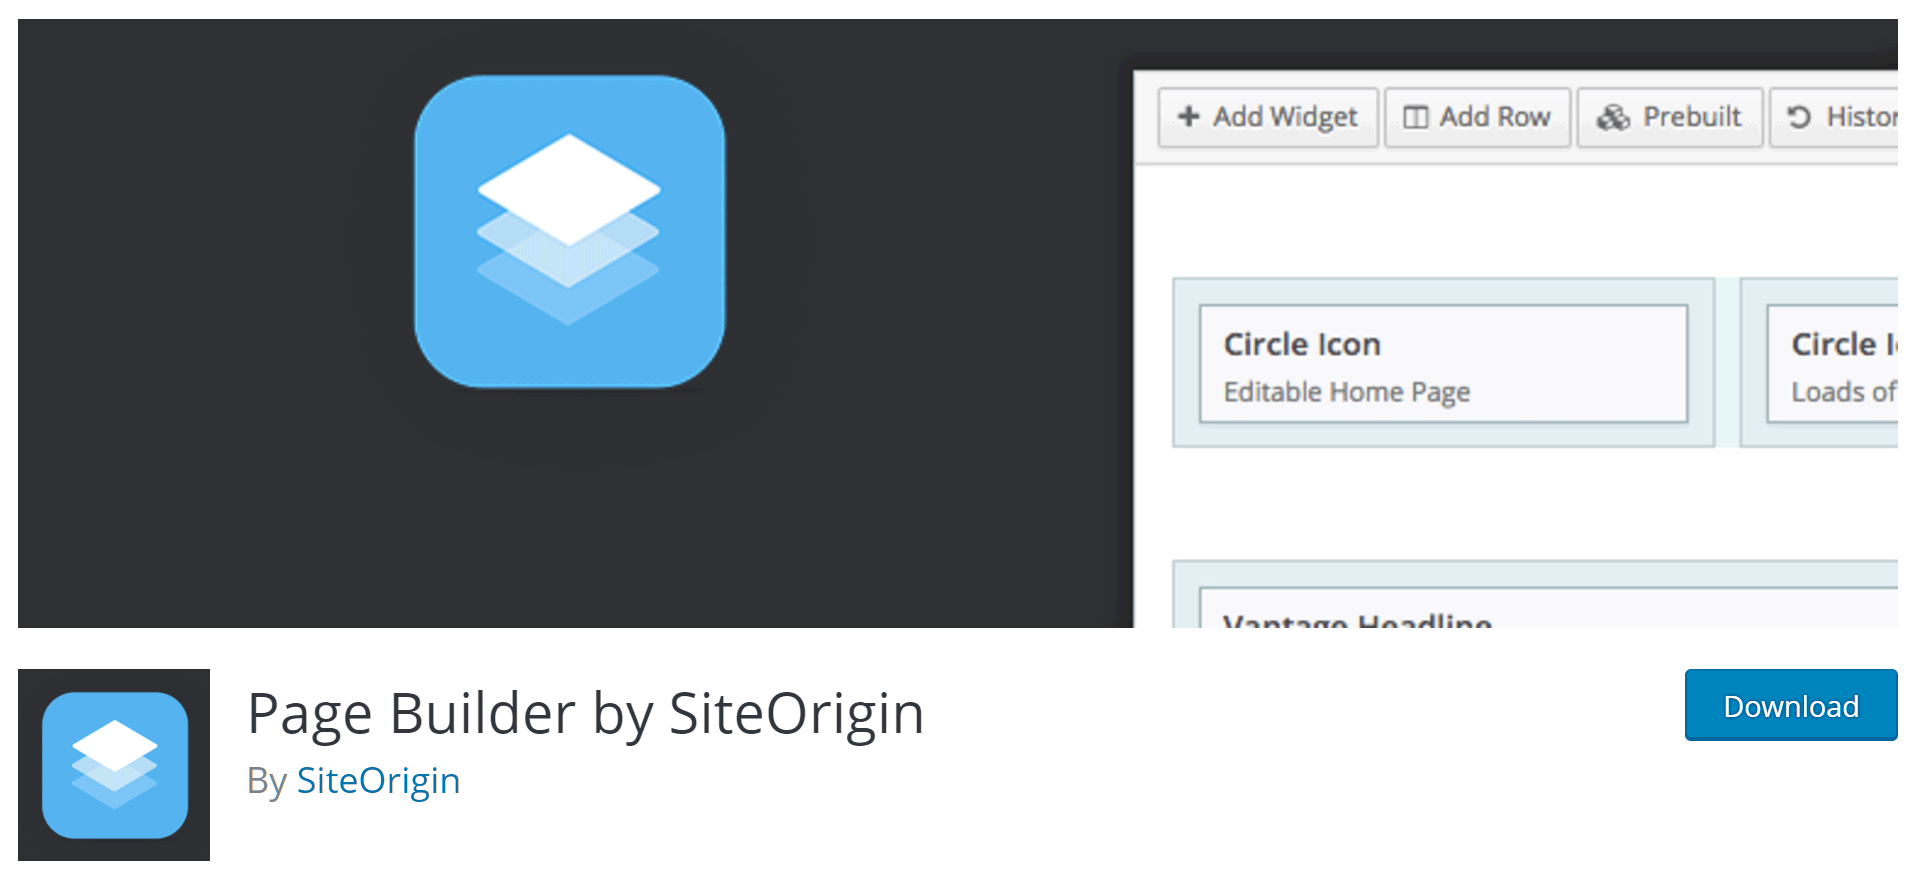 The SiteOrigin Page Builder Plugin